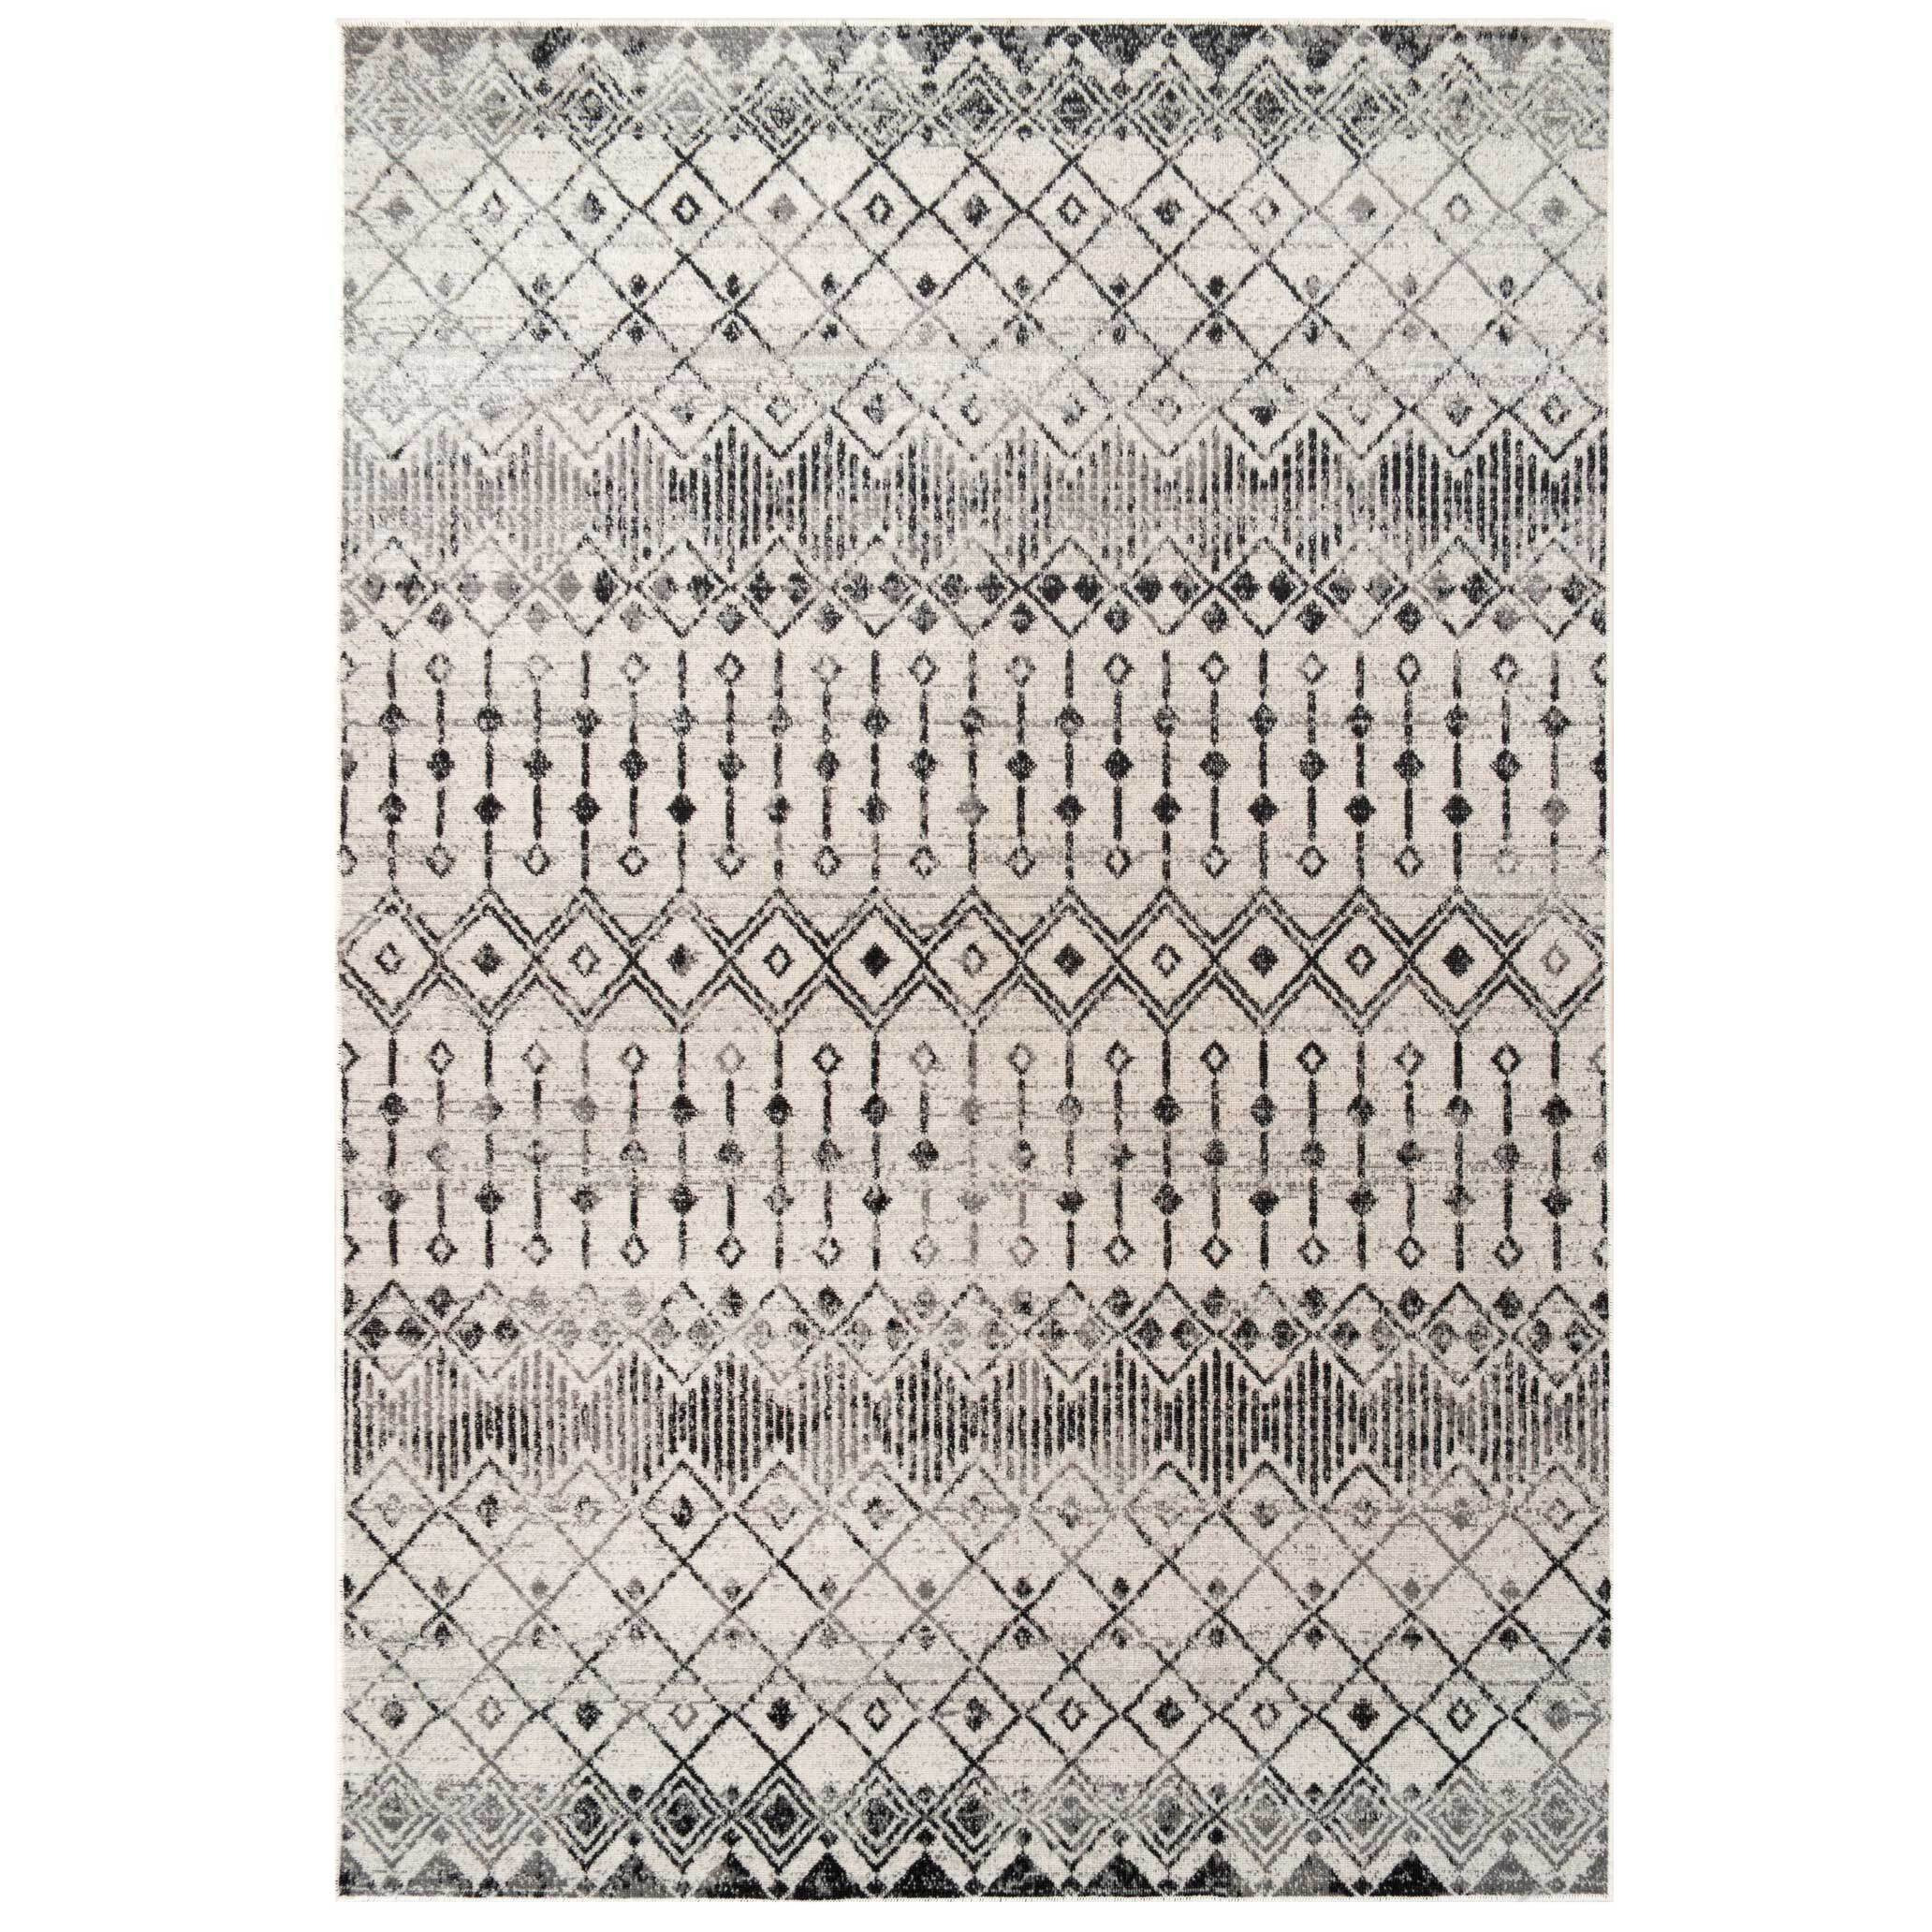 Grey Moroccan Tile Living Room Rug - Moda - 60cm x 110cm